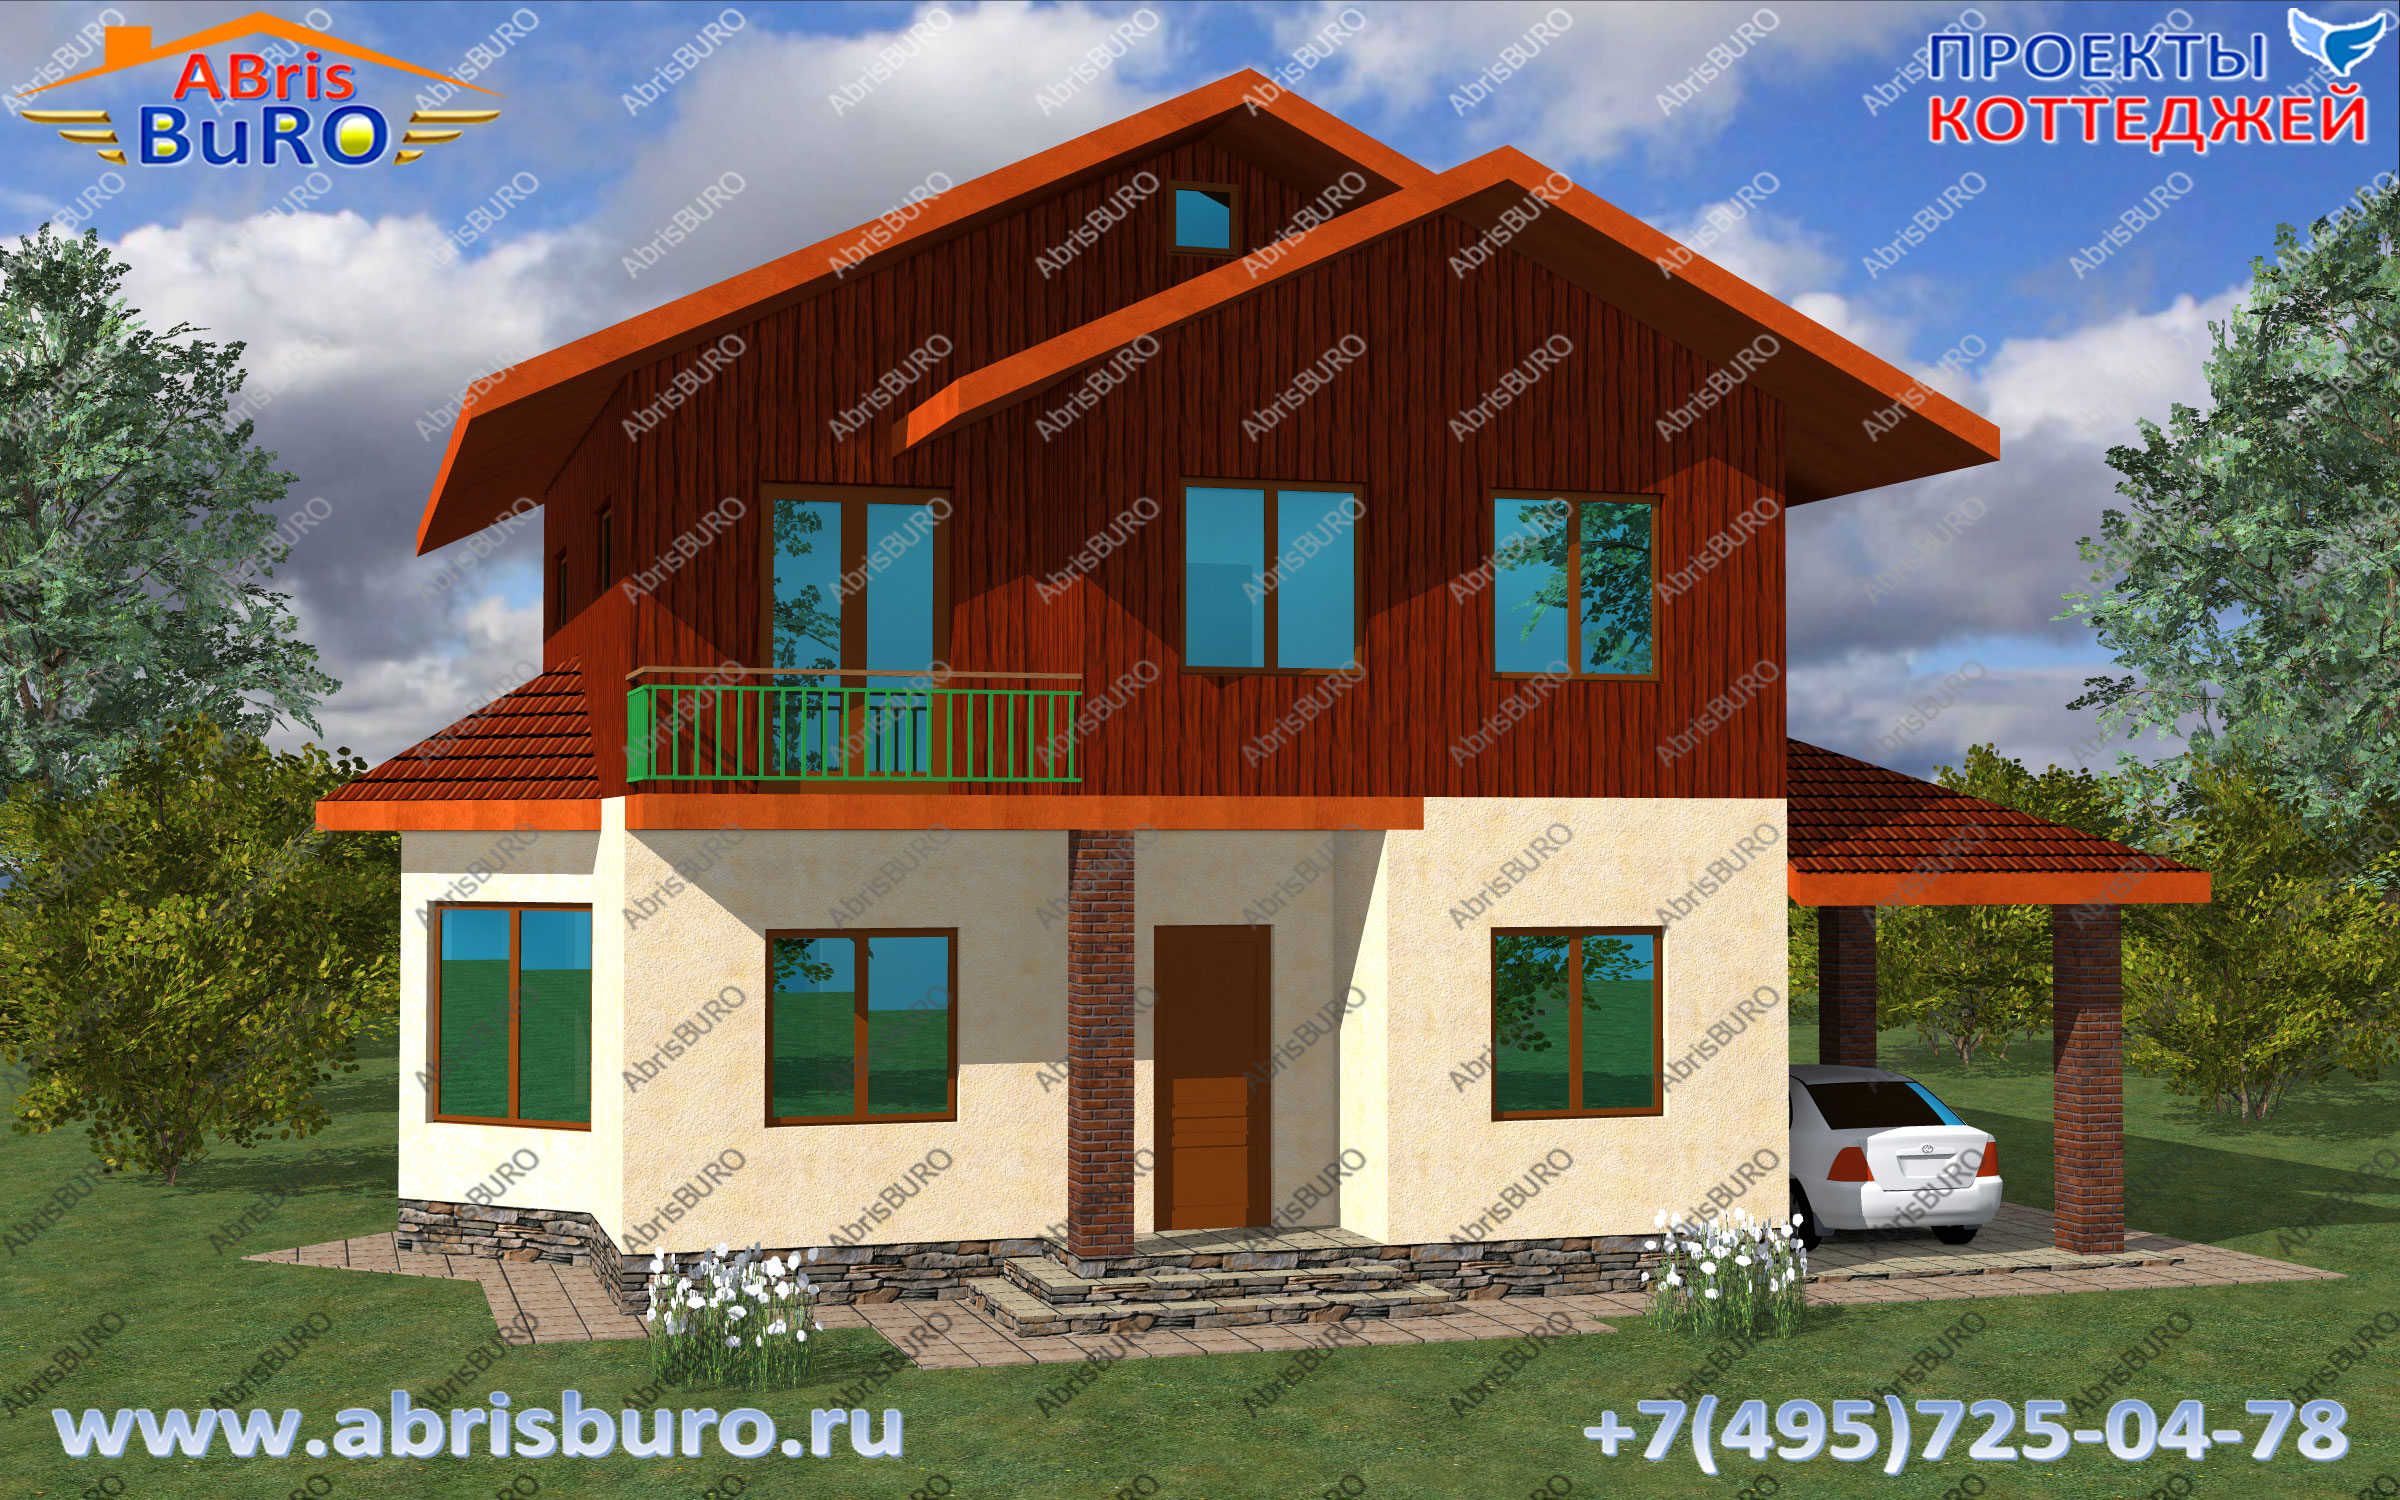 K1203-123 Дом с балконами, террасой и парковкой www.abrisburo.ru